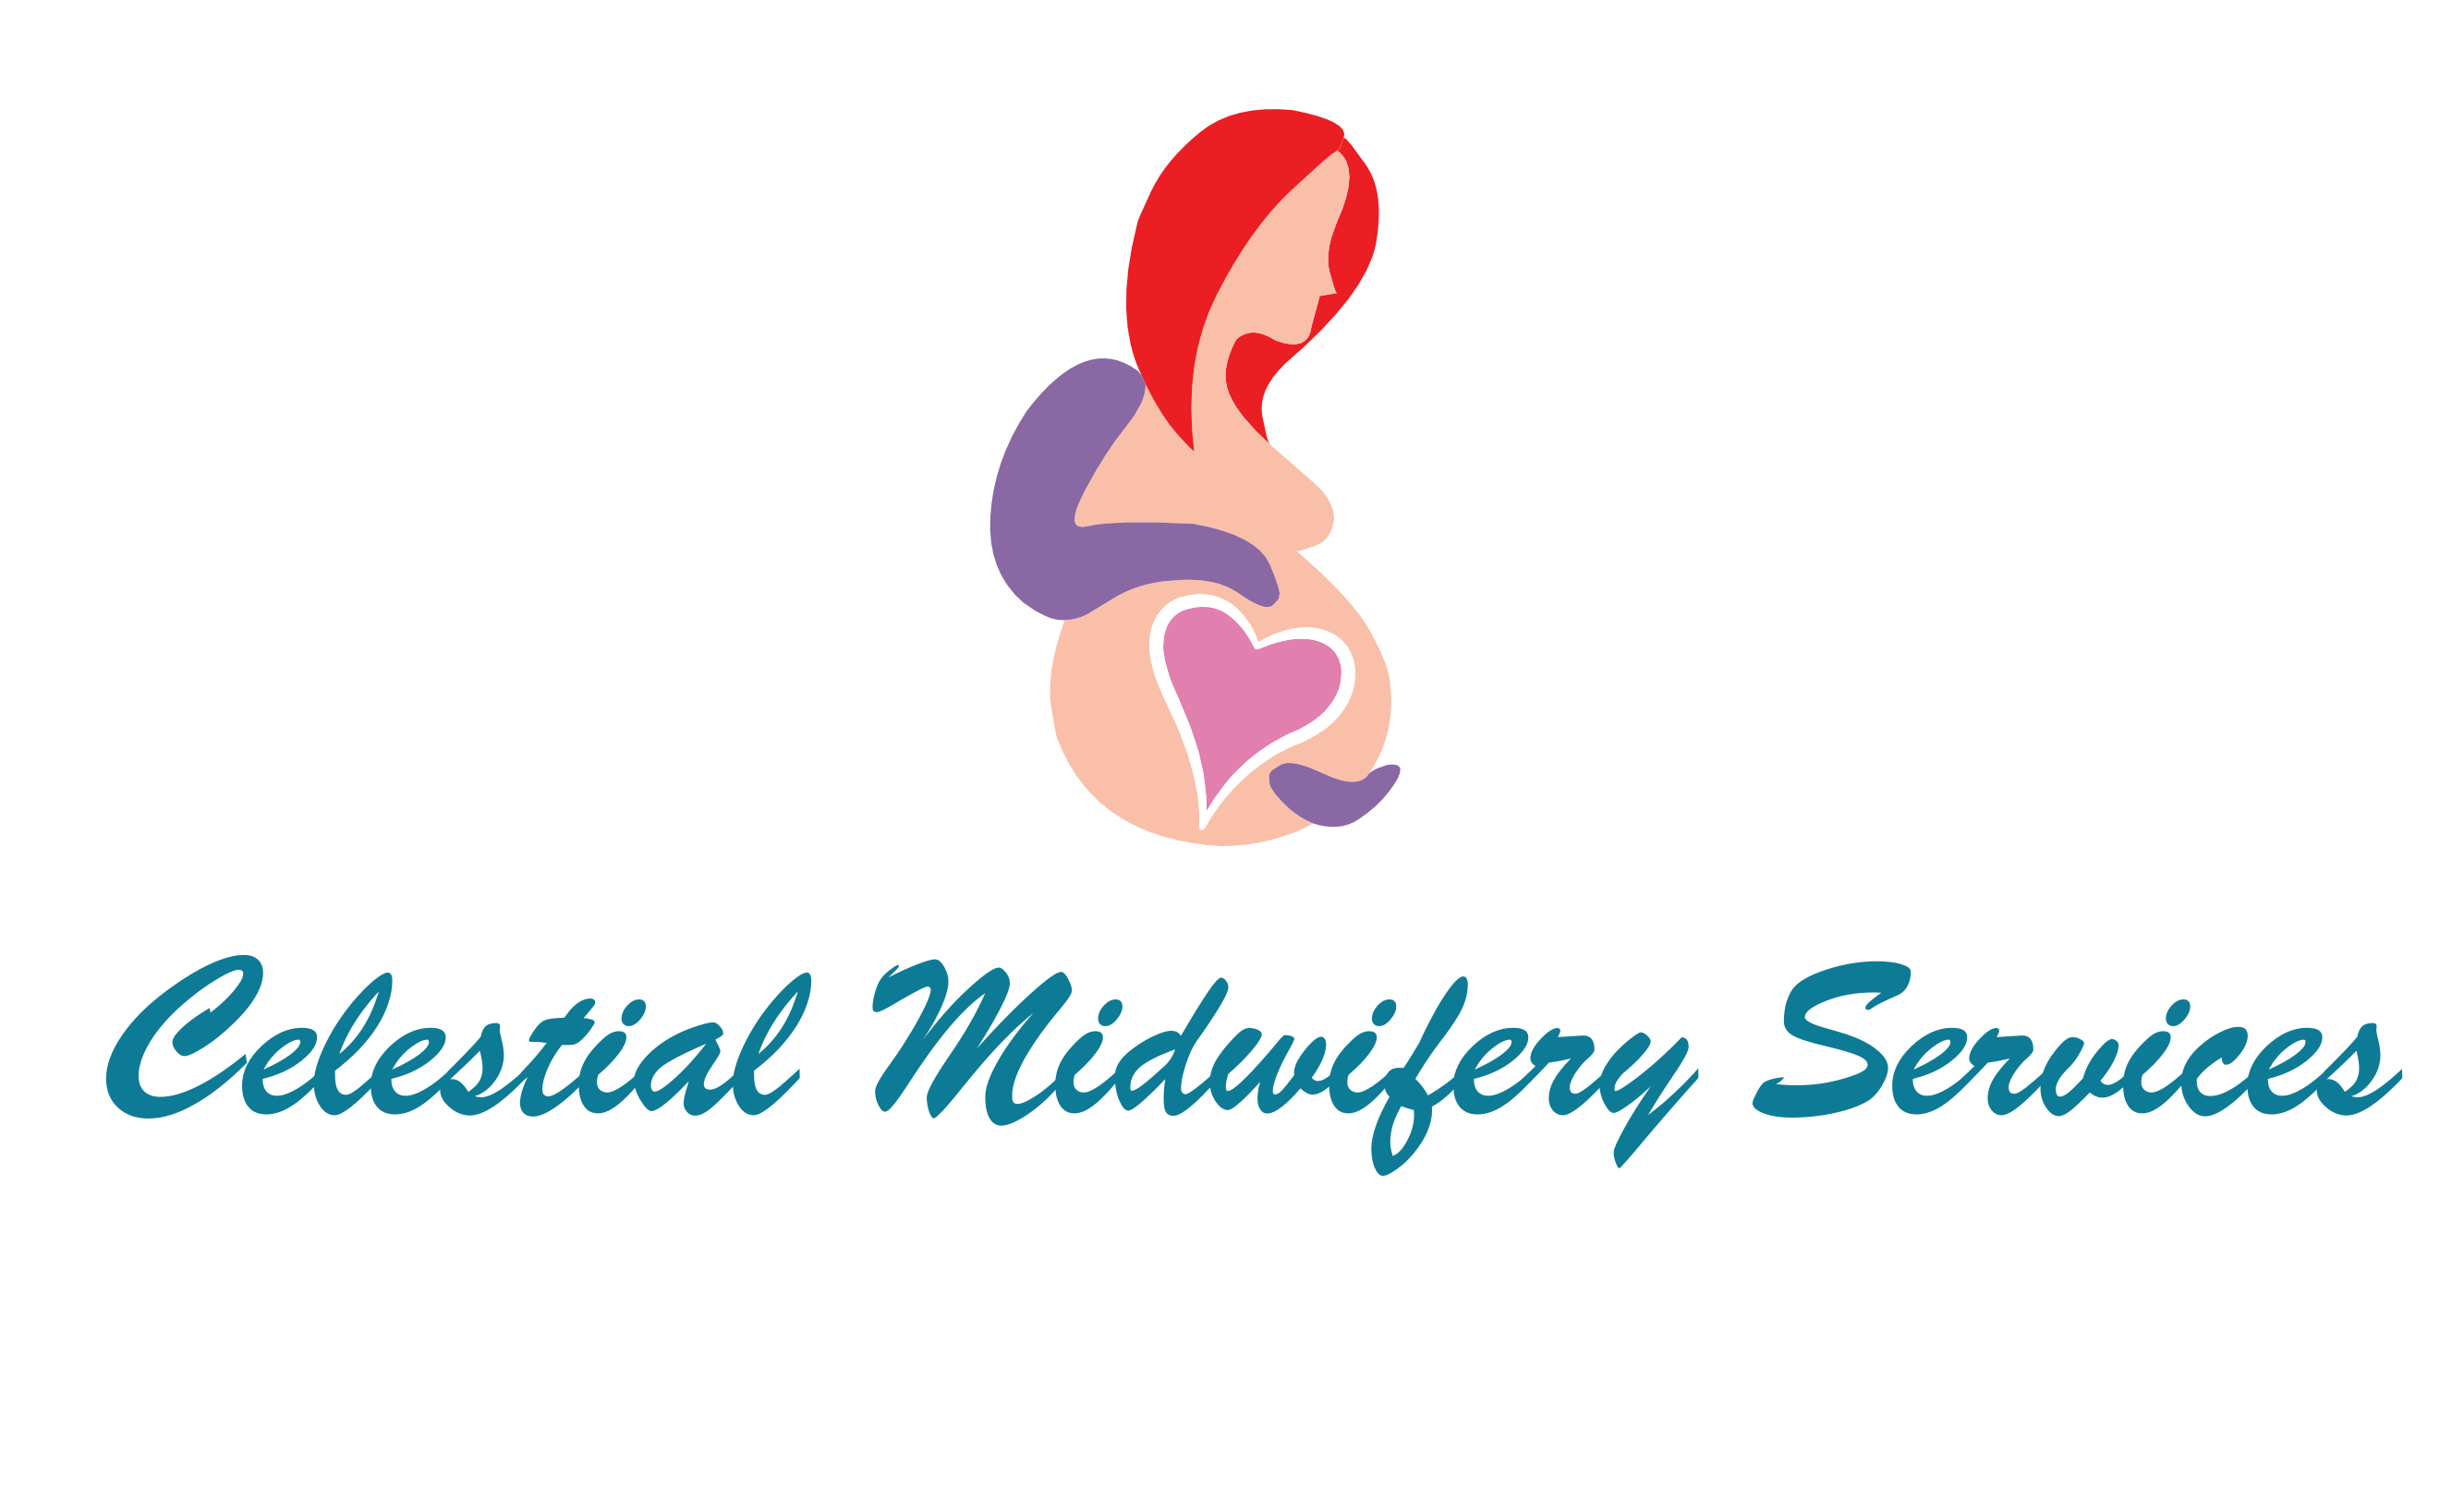 Celestial Midwifery